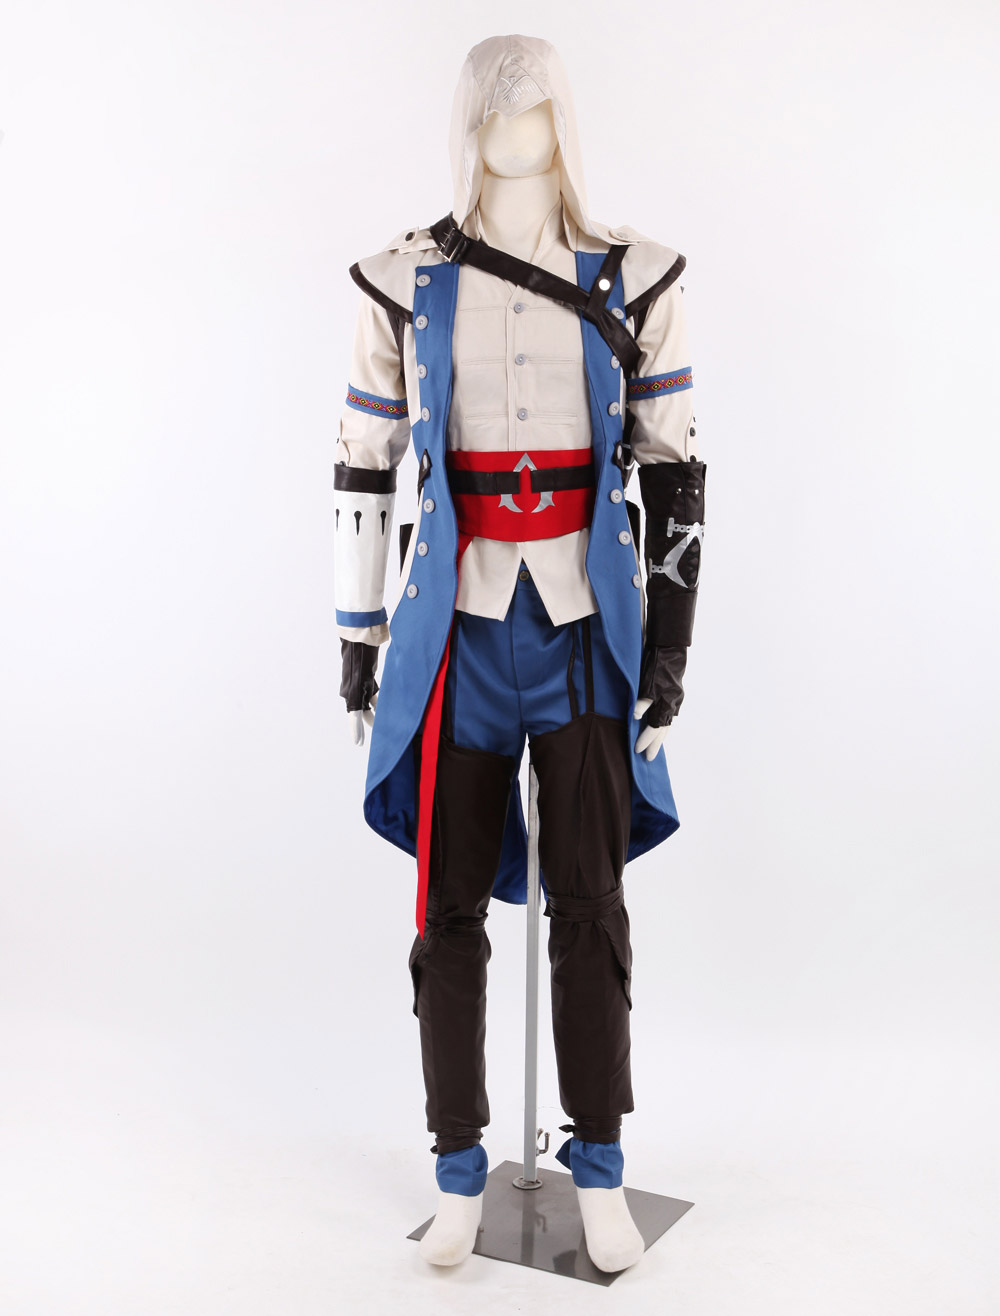 Buy Assassin's Creed Costumes Uniform Online Australia